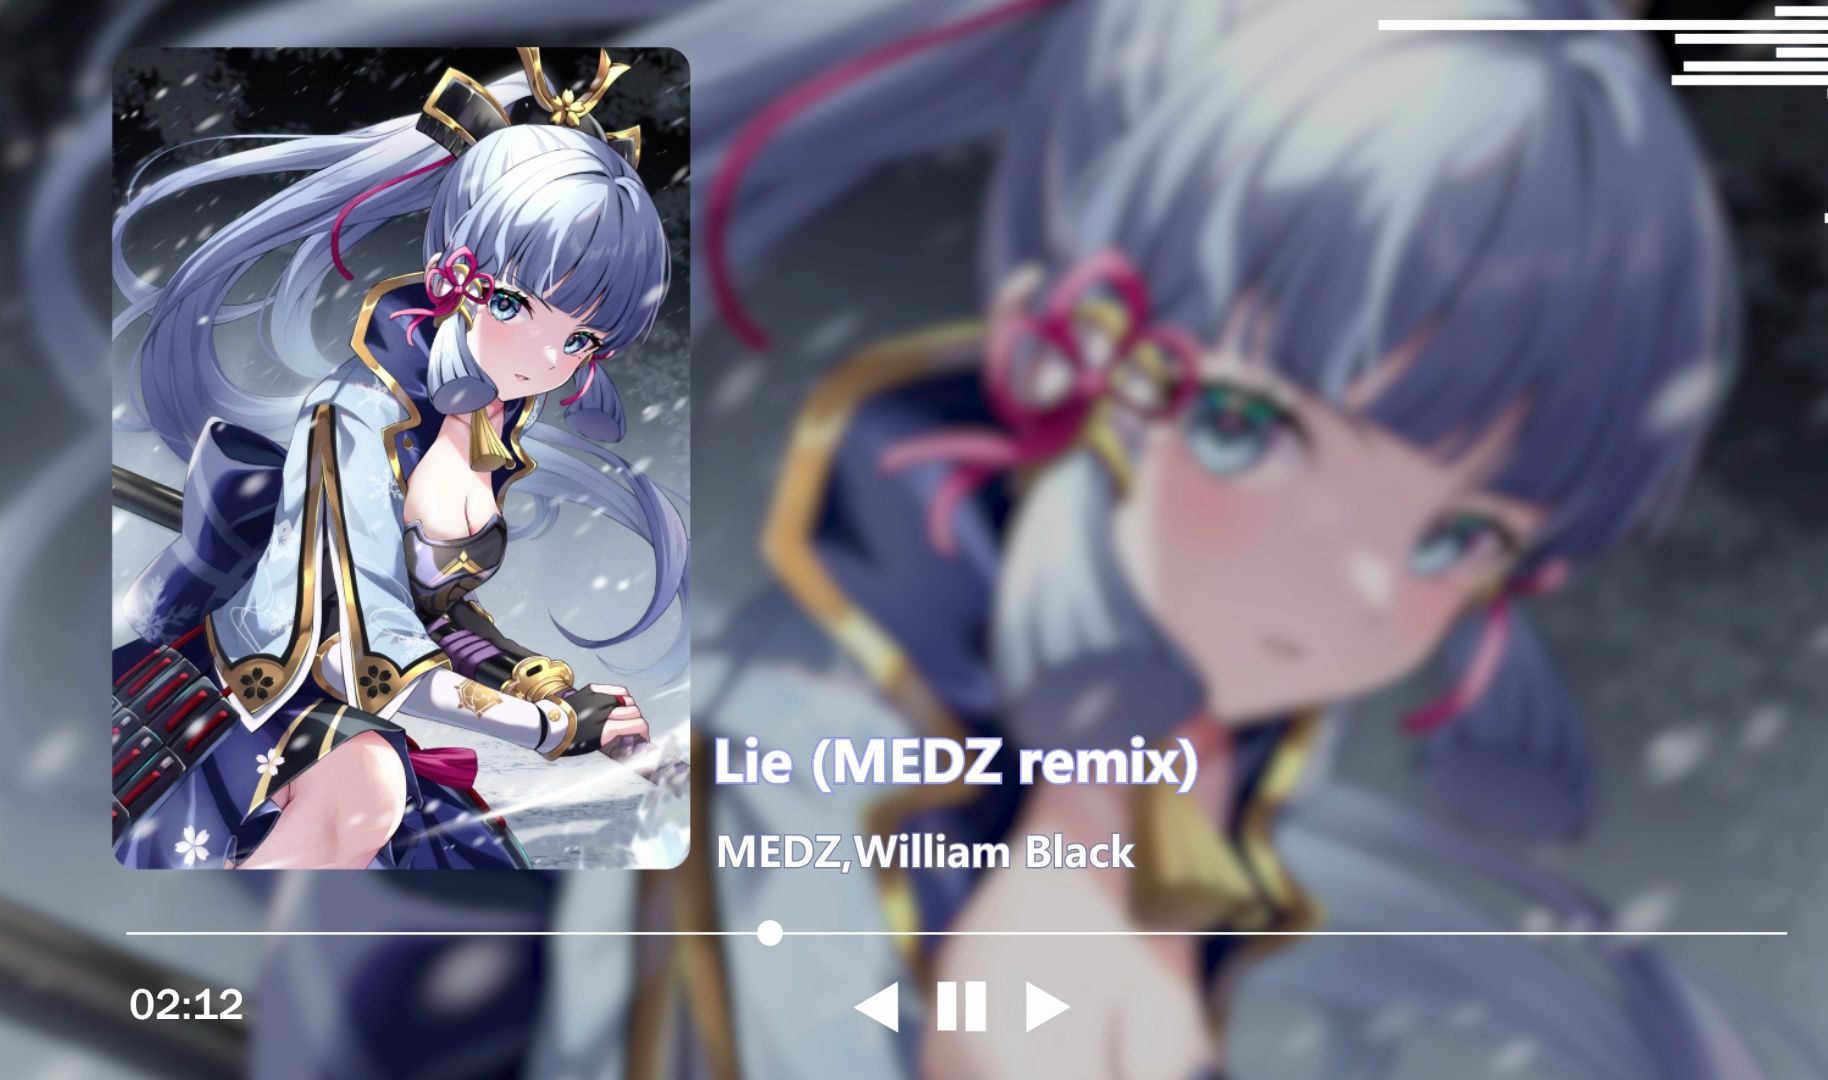 【Melodic Bass】MEDZ,William Black - Lie (MEDZ remix)